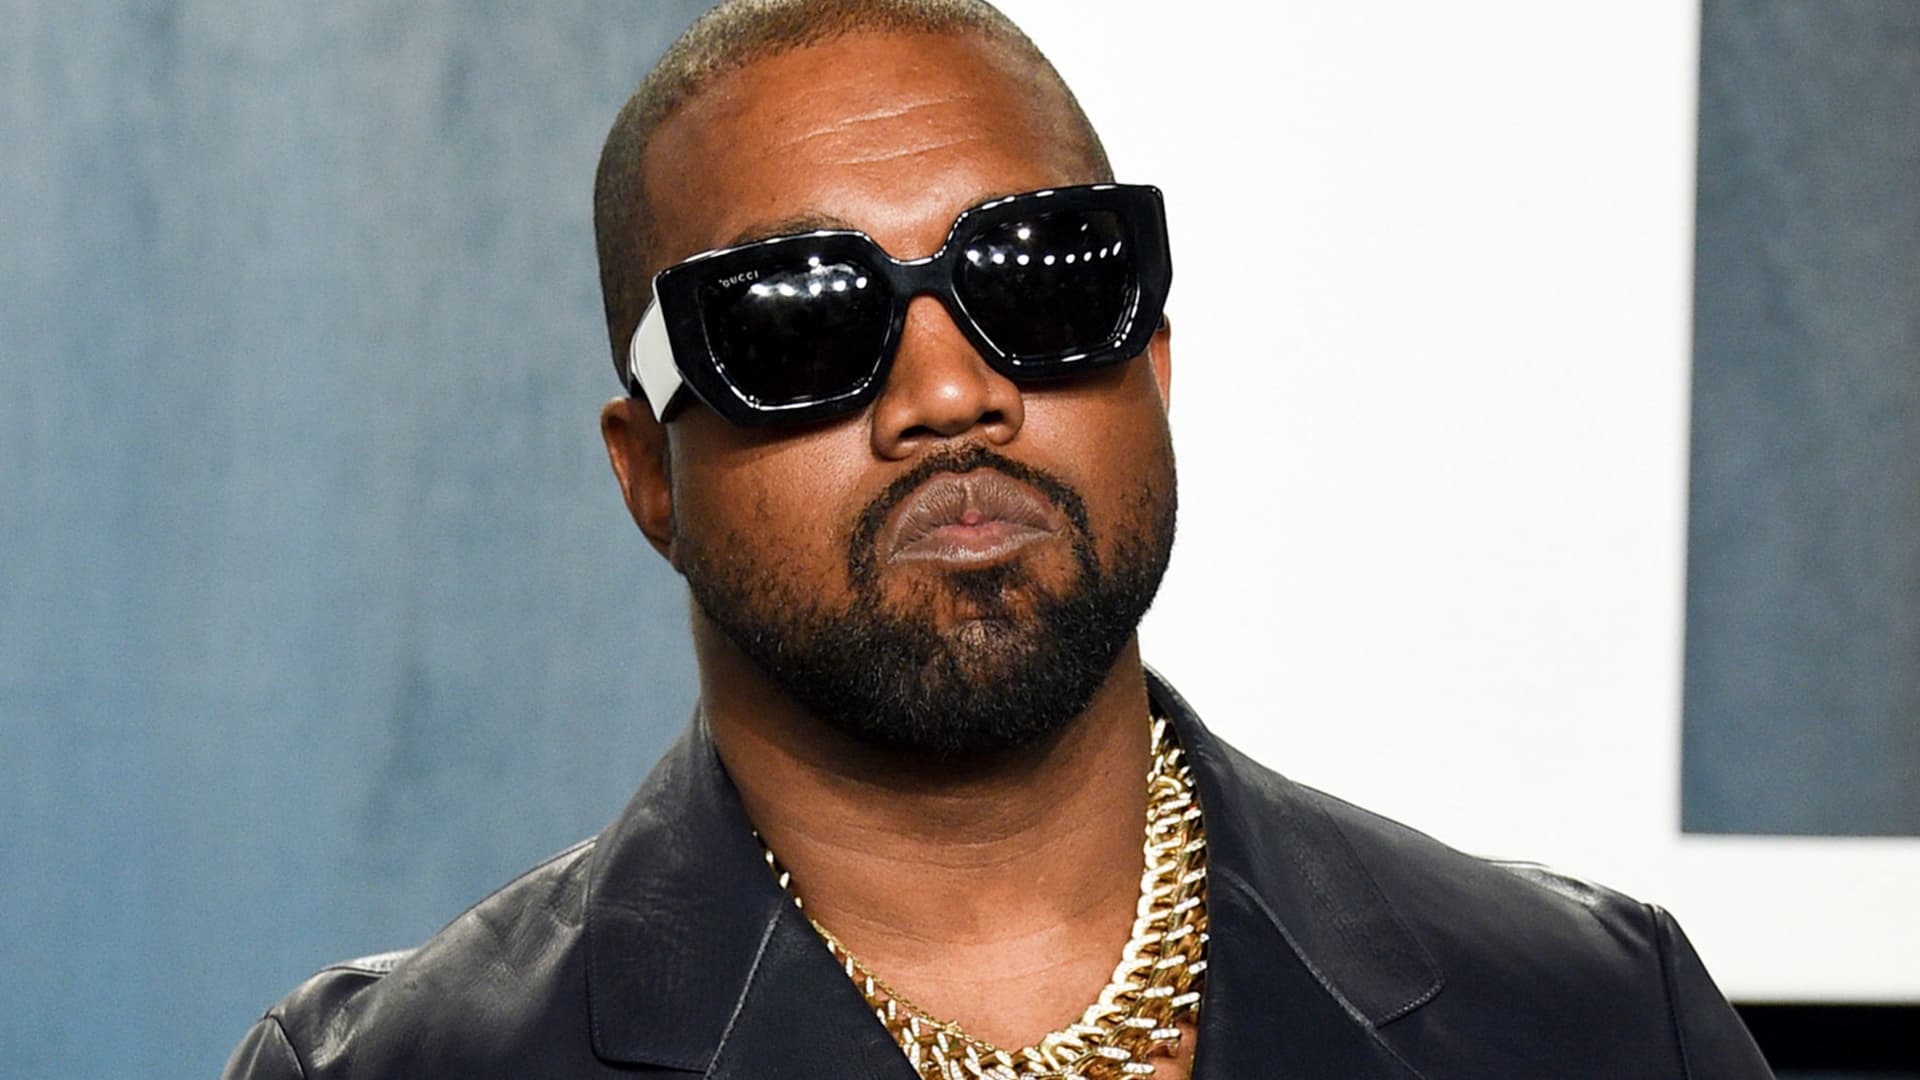 Kanye West is buying conservative social media platform Parler, company says